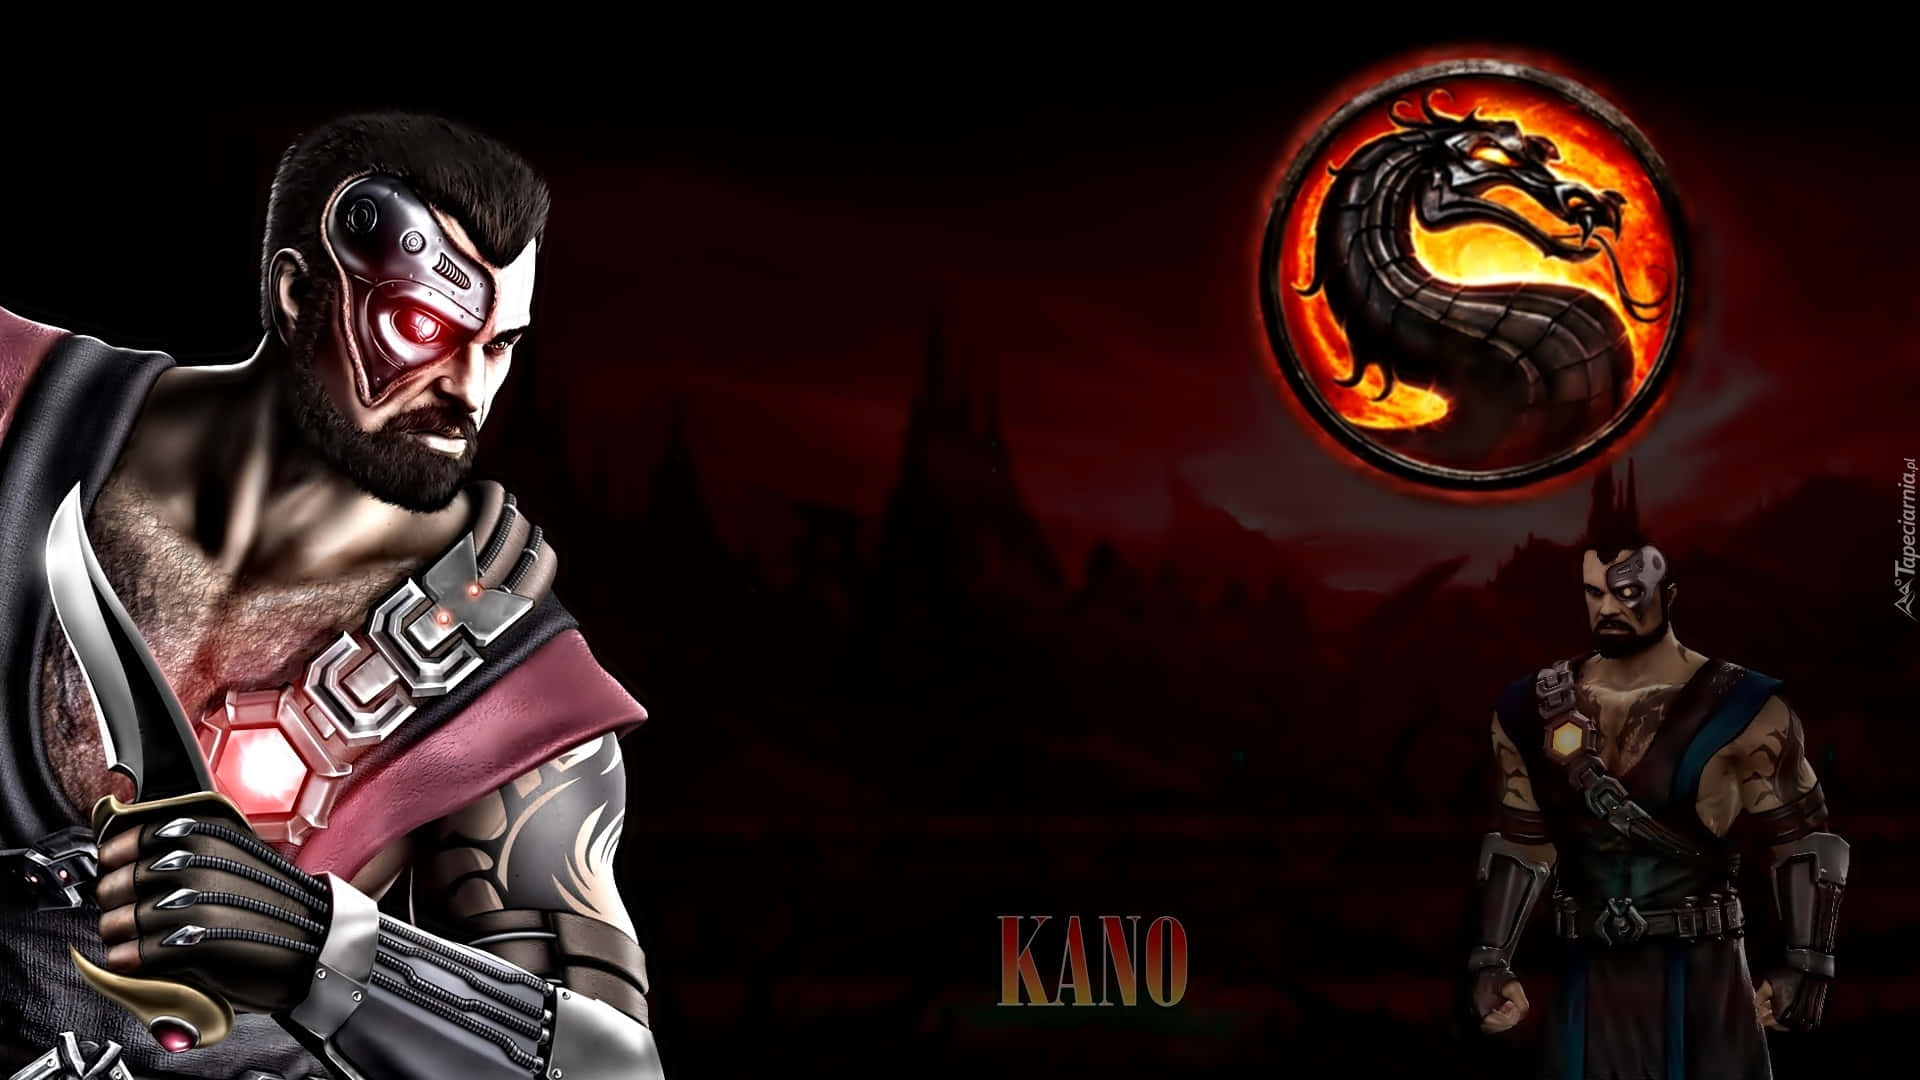 Intense Kano from Mortal Kombat in Battle Stance Wallpaper